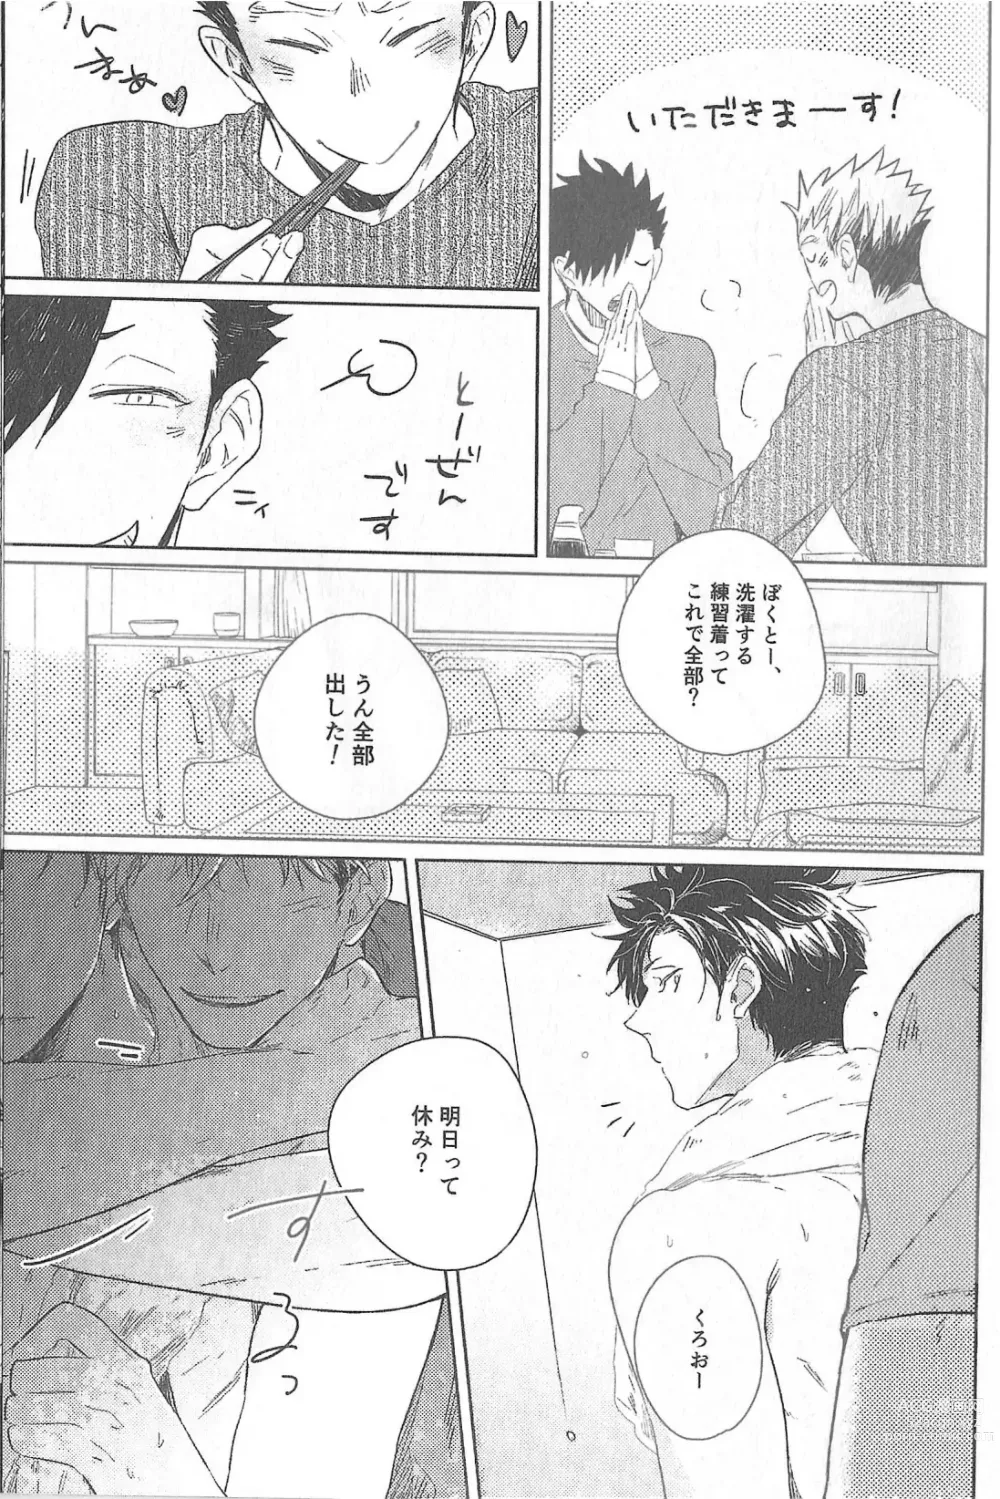 Page 6 of doujinshi Cream